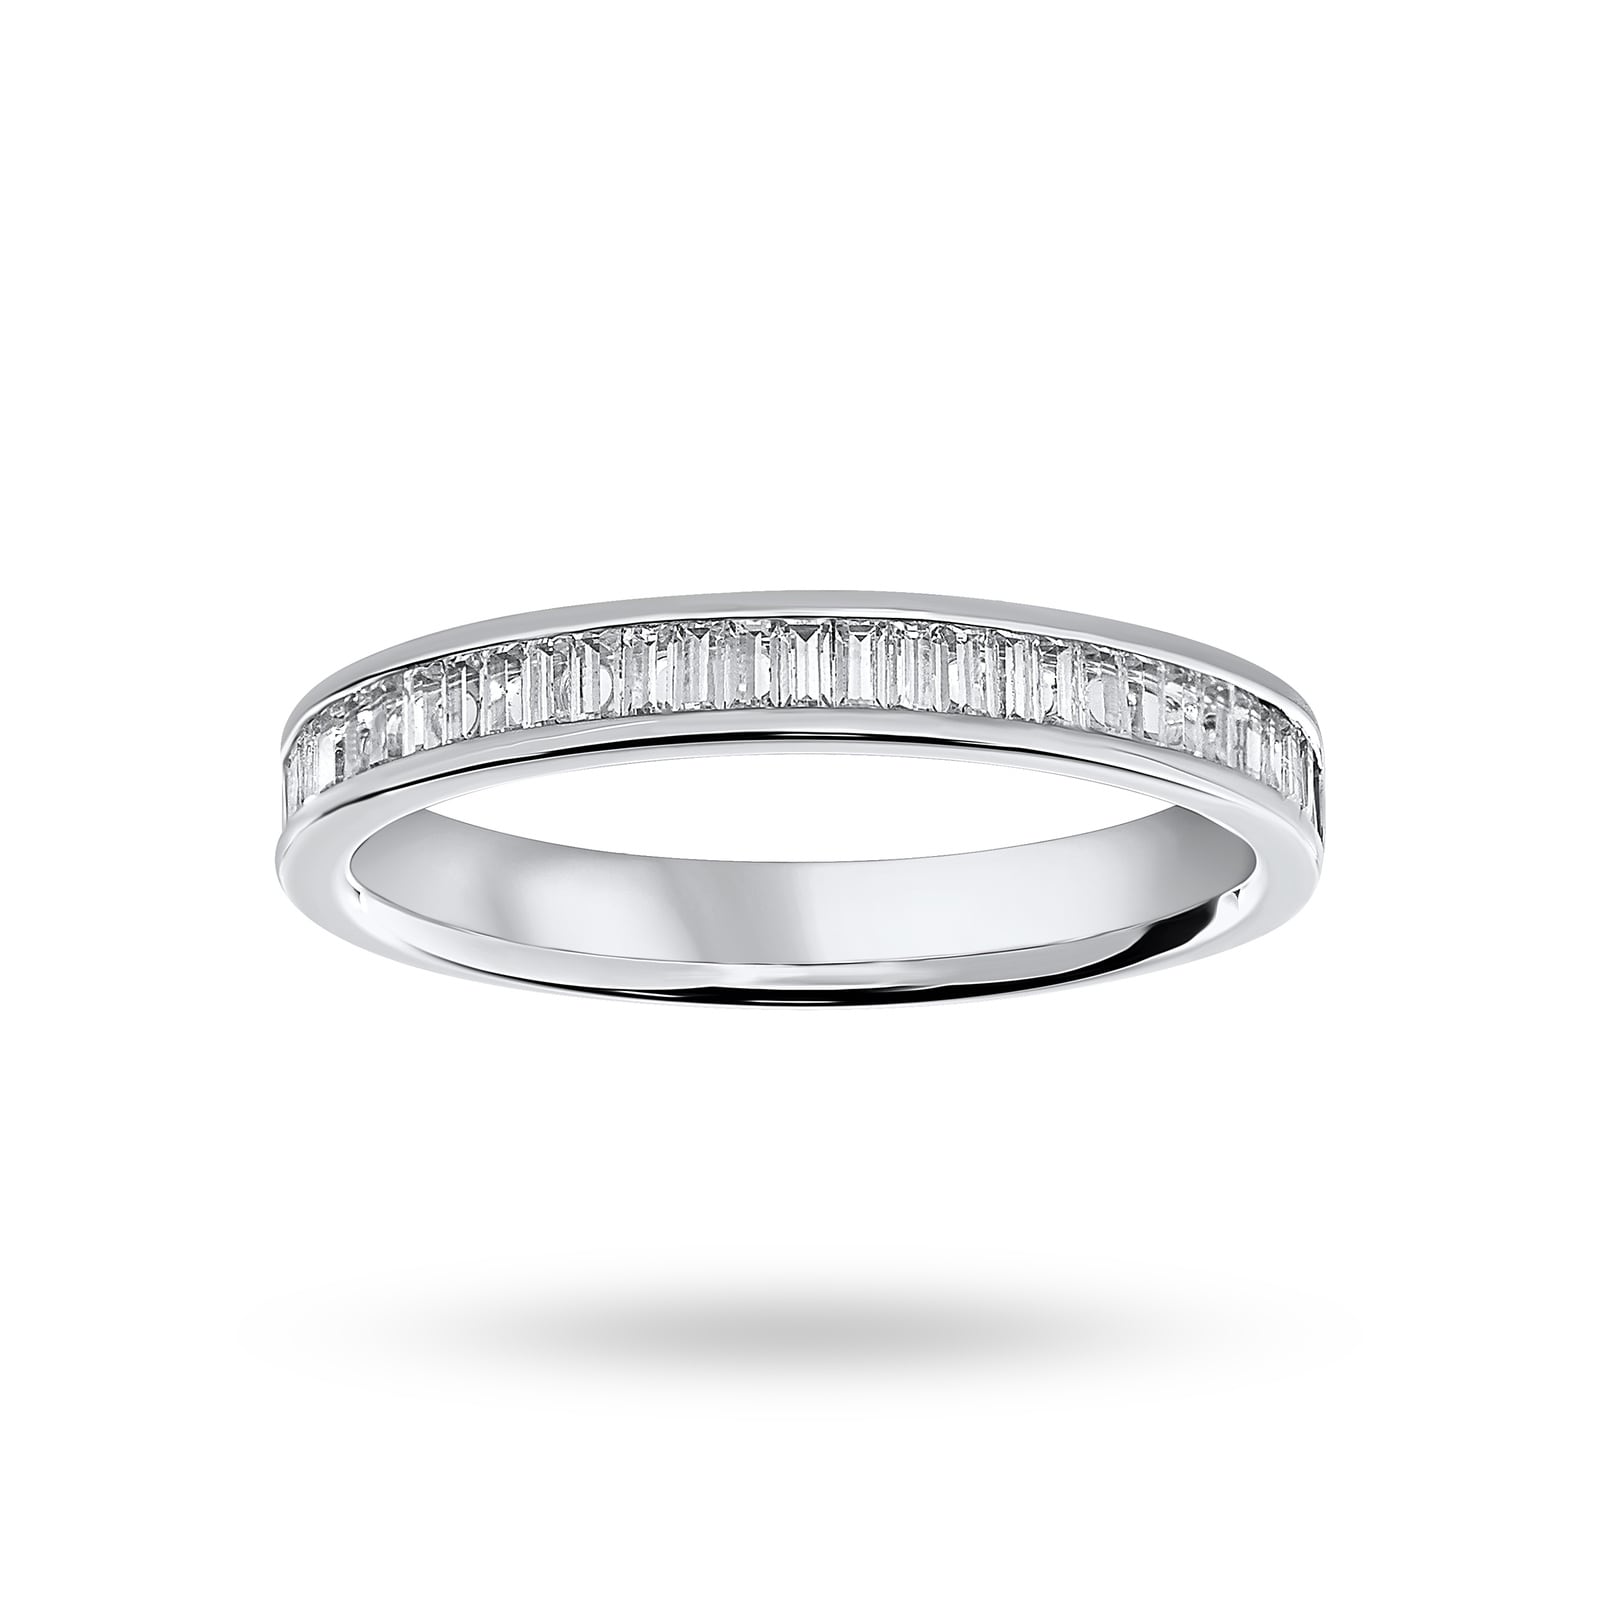 0 50ct brilliant and baguette cut diamond eternity ring